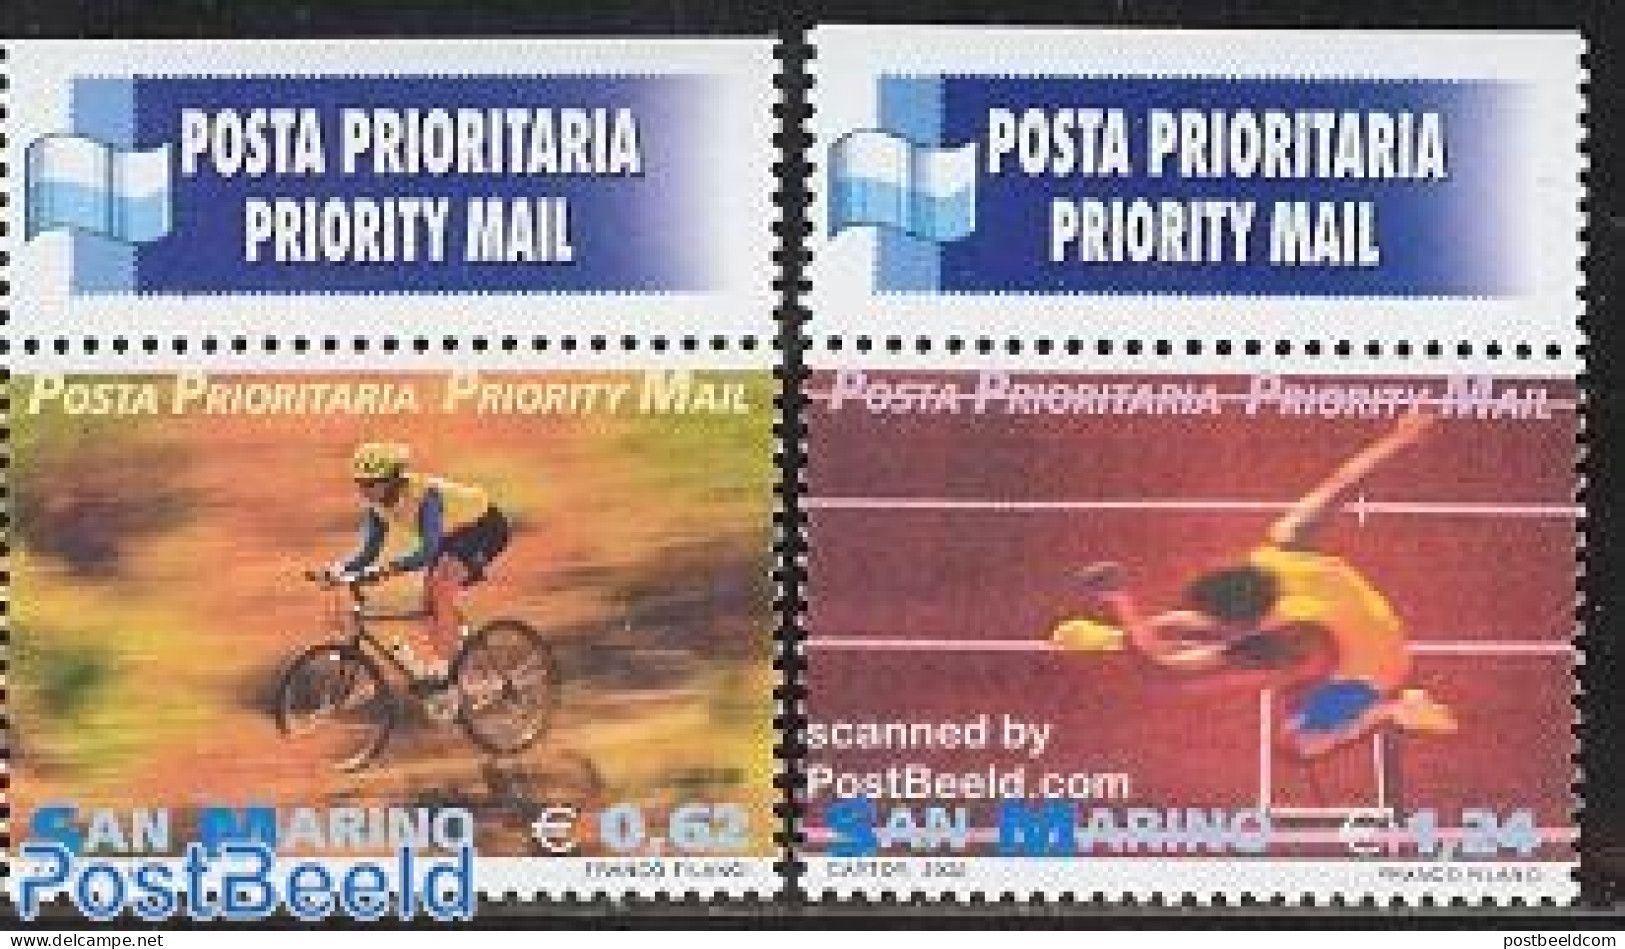 San Marino 2002 Sports, Priority 2v+priority Tab, Mint NH, Sport - Athletics - Cycling - Ungebraucht